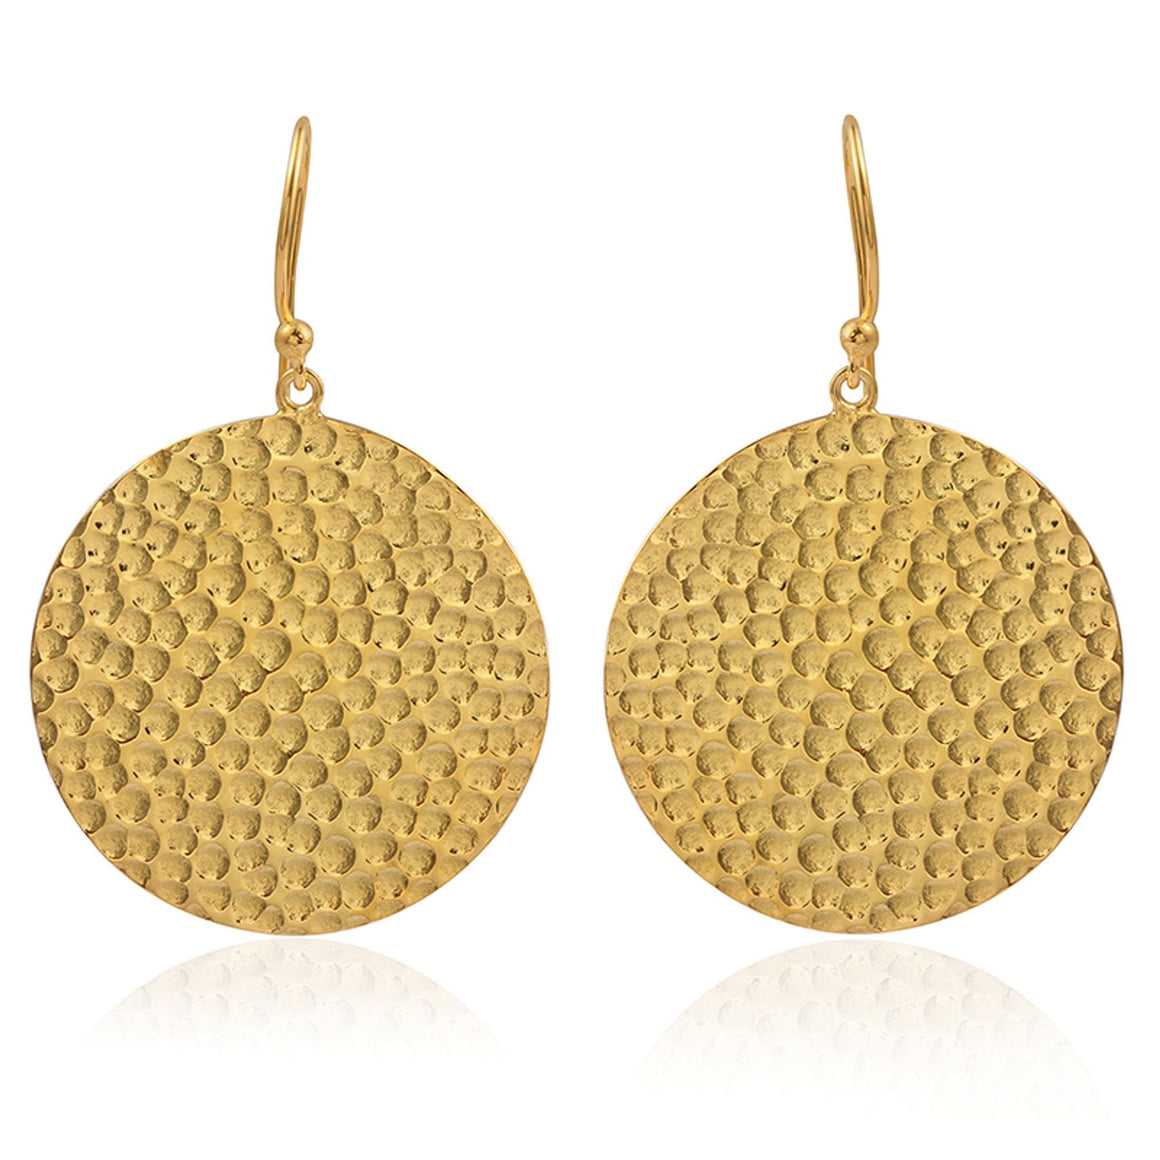 Manjusha Jewels earrings Devi Circle Earrings in Gold